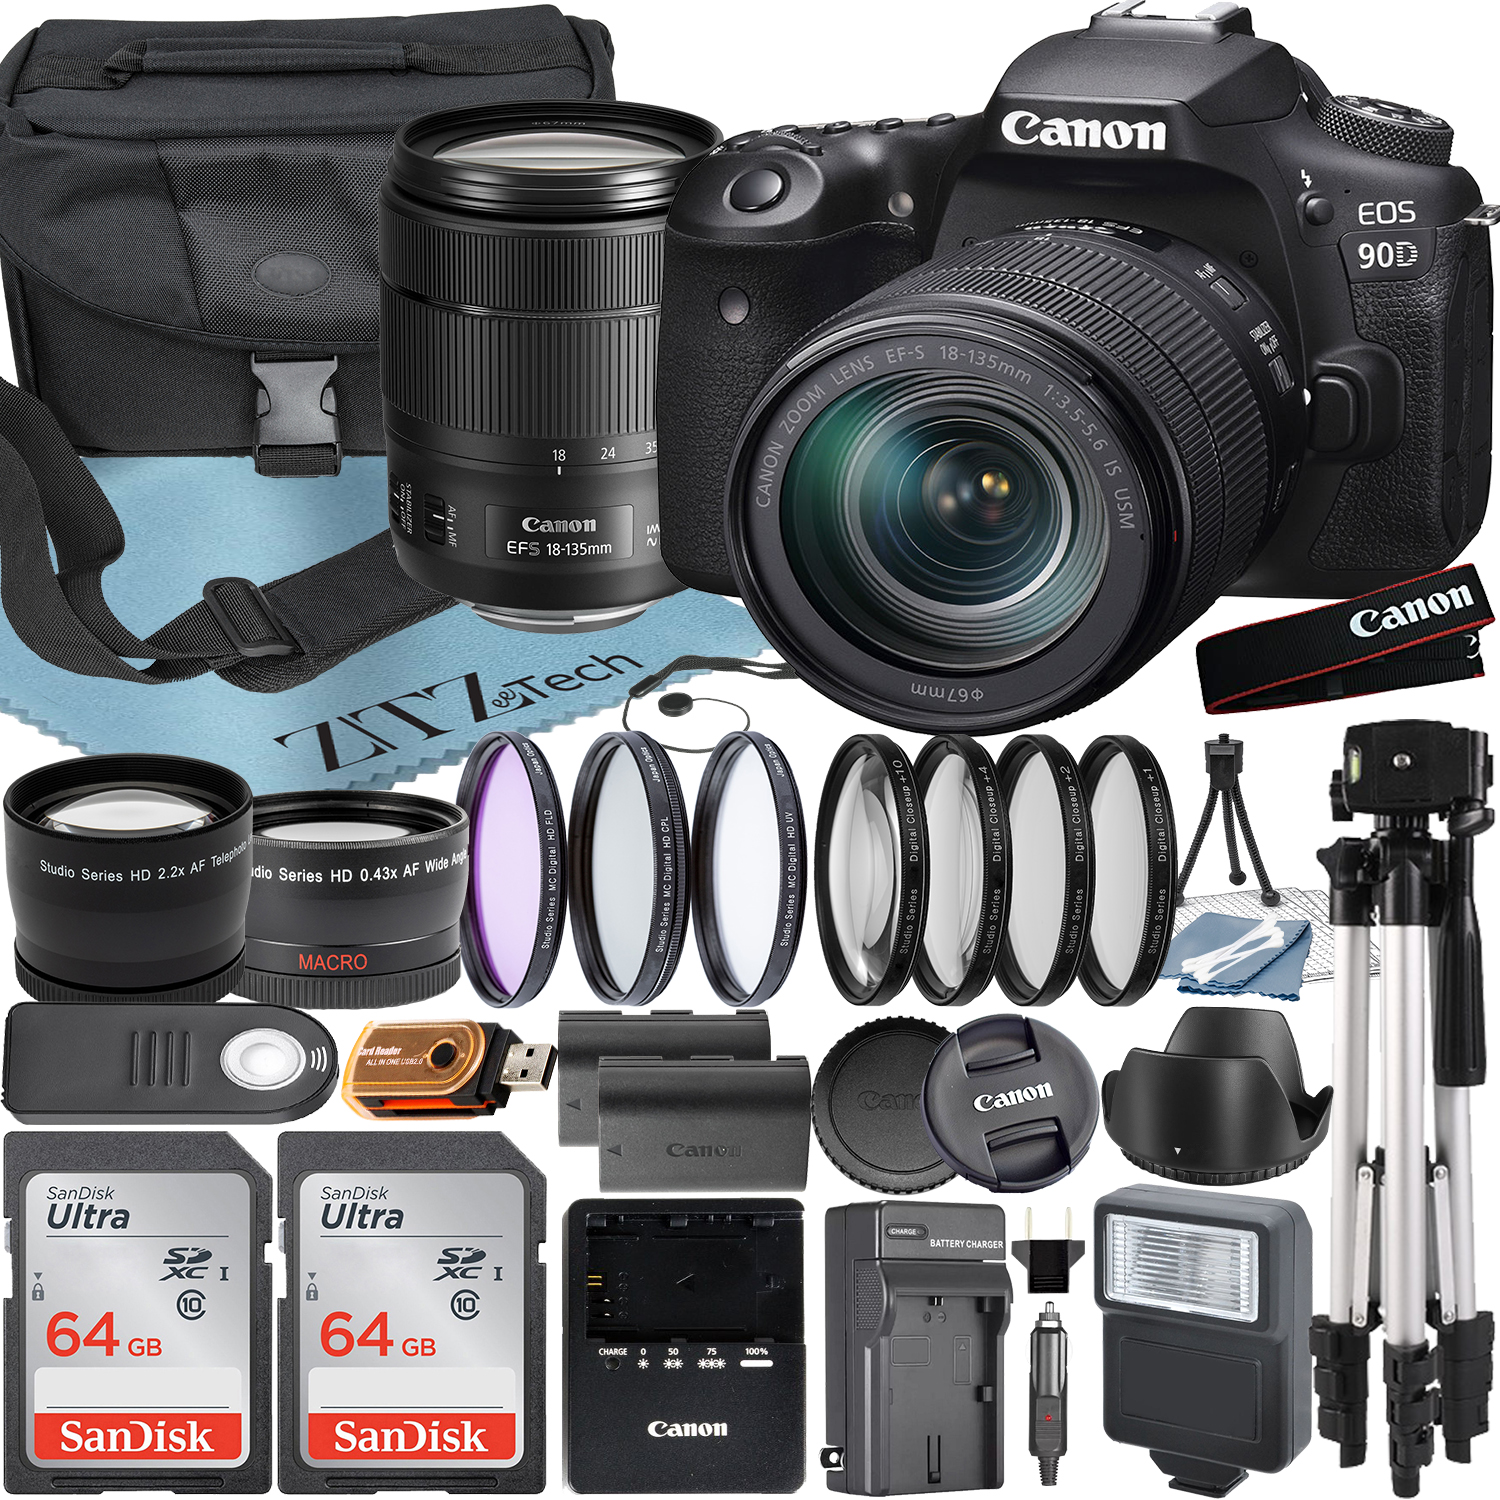 Canon EOS 90D DSLR Camera with 18-135mm IS USM Lens + 2 Pieces SanDisk 64GB Card + Case + Telephoto + Tripod + ZeeTech Accessory Bundle